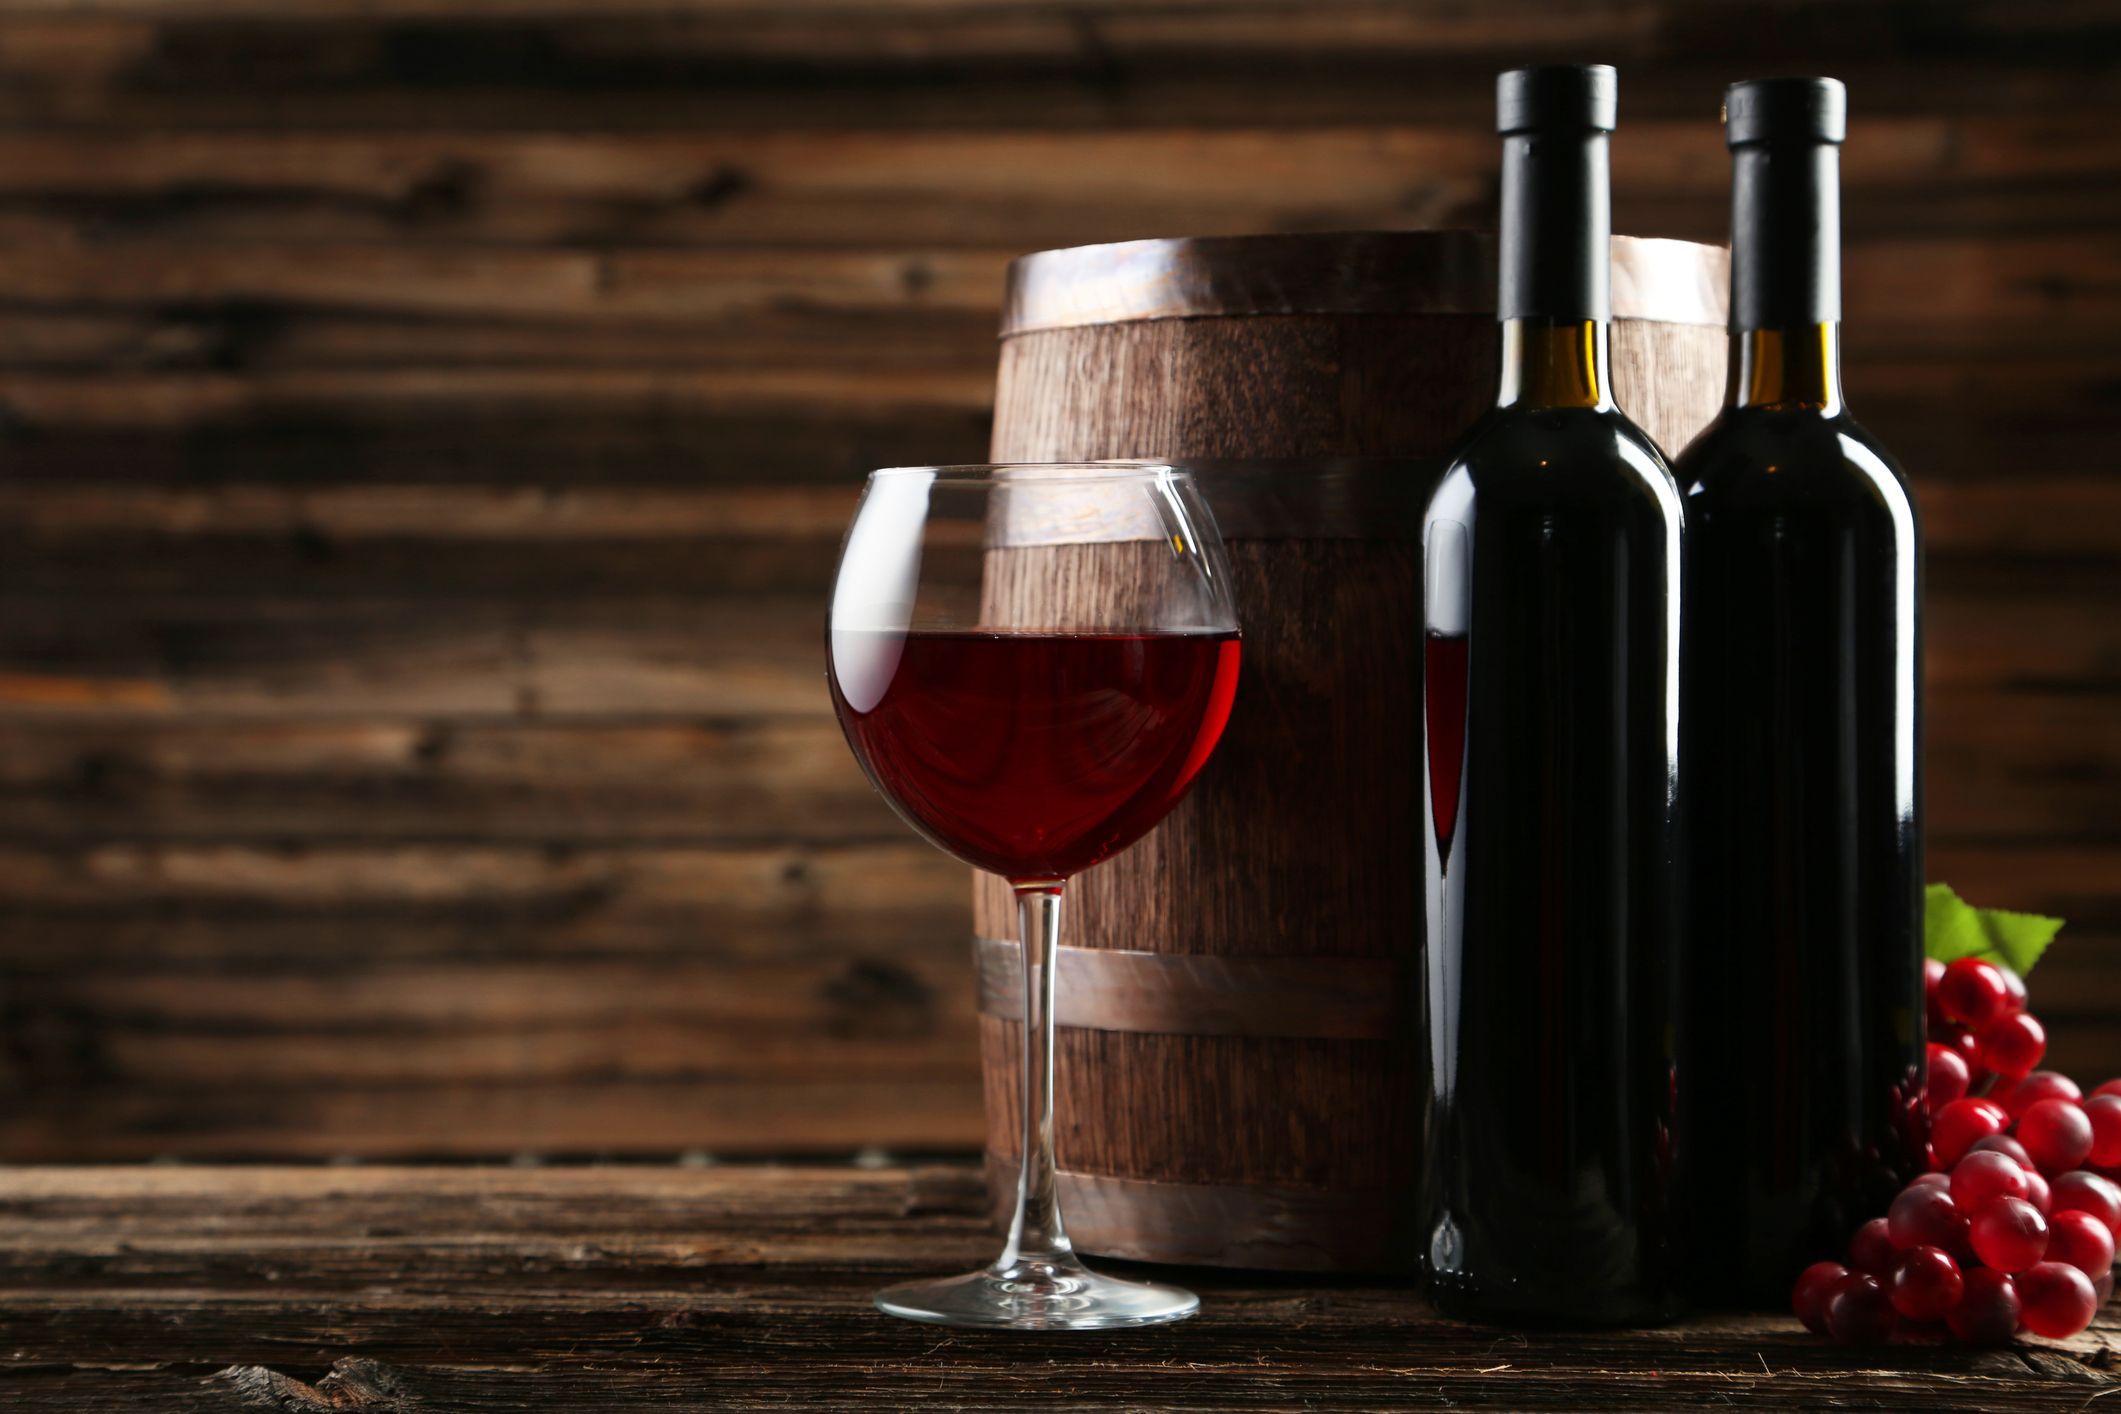 Cavatappi elettrico per vino senza fili SUOXU: GENIALATA a prezzo IRRISORIO  - Webnews